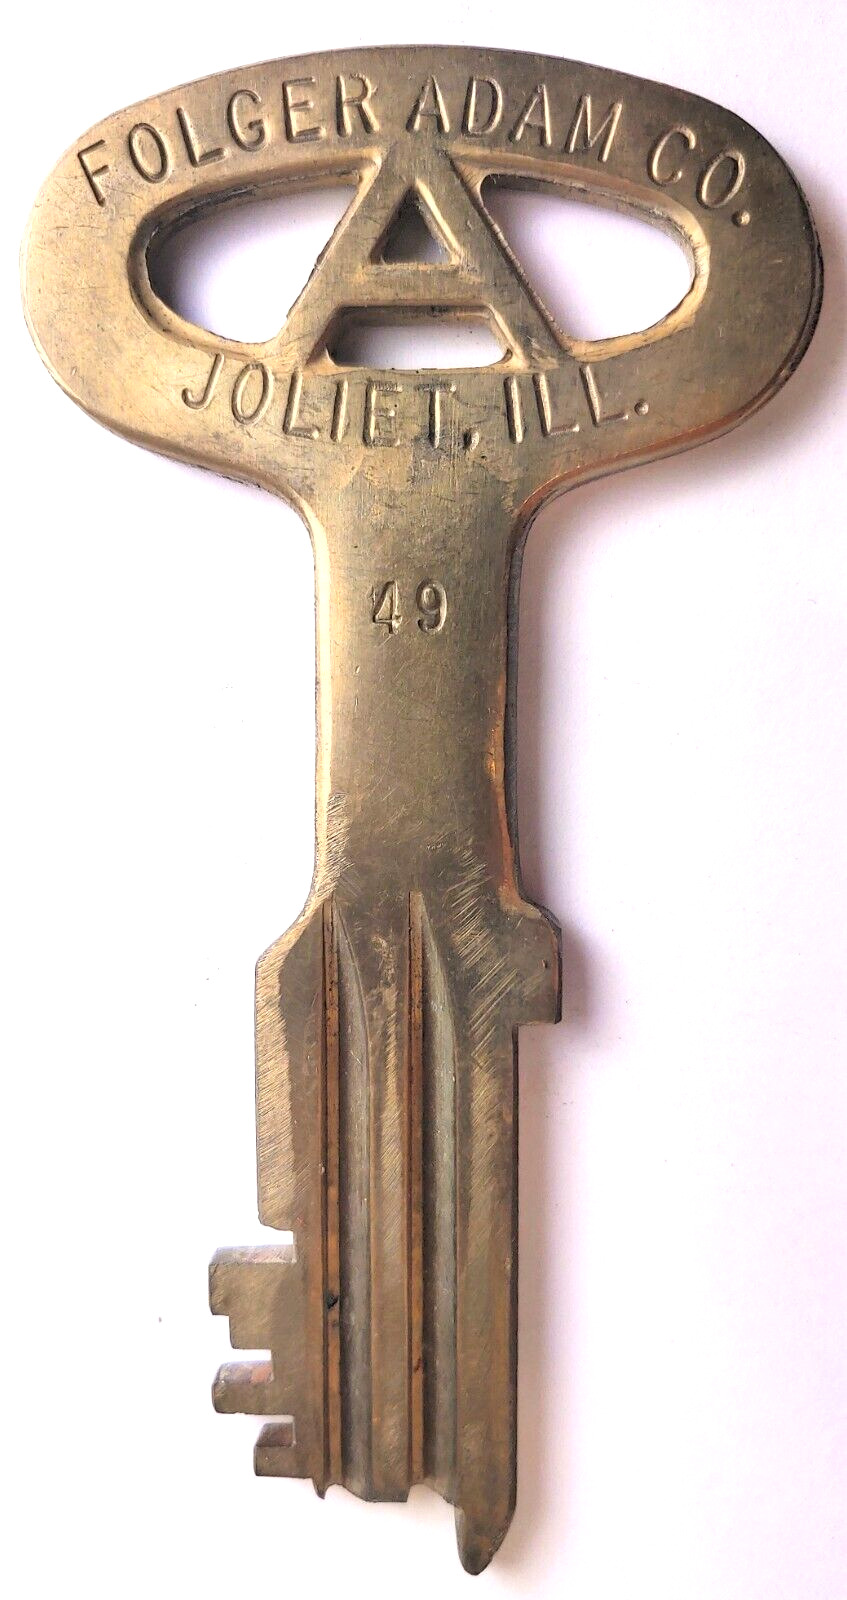 Folger Adam Co. Prison Jail Key Joliet, ILL. Bronze Circa 1940 Jacksonville, FL